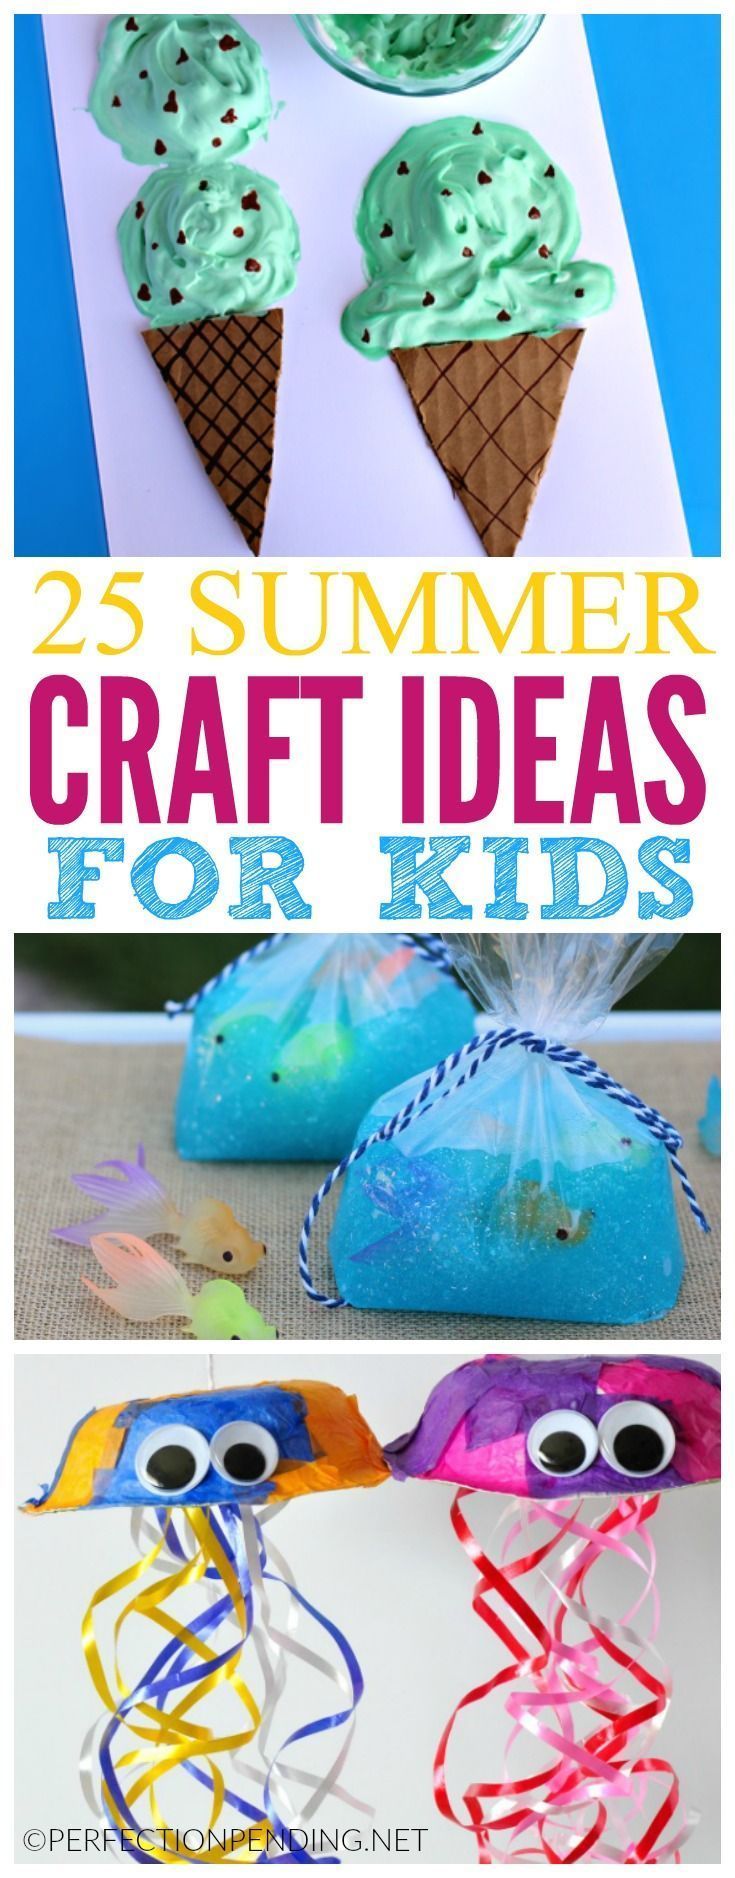 23 summer crafts life
 ideas